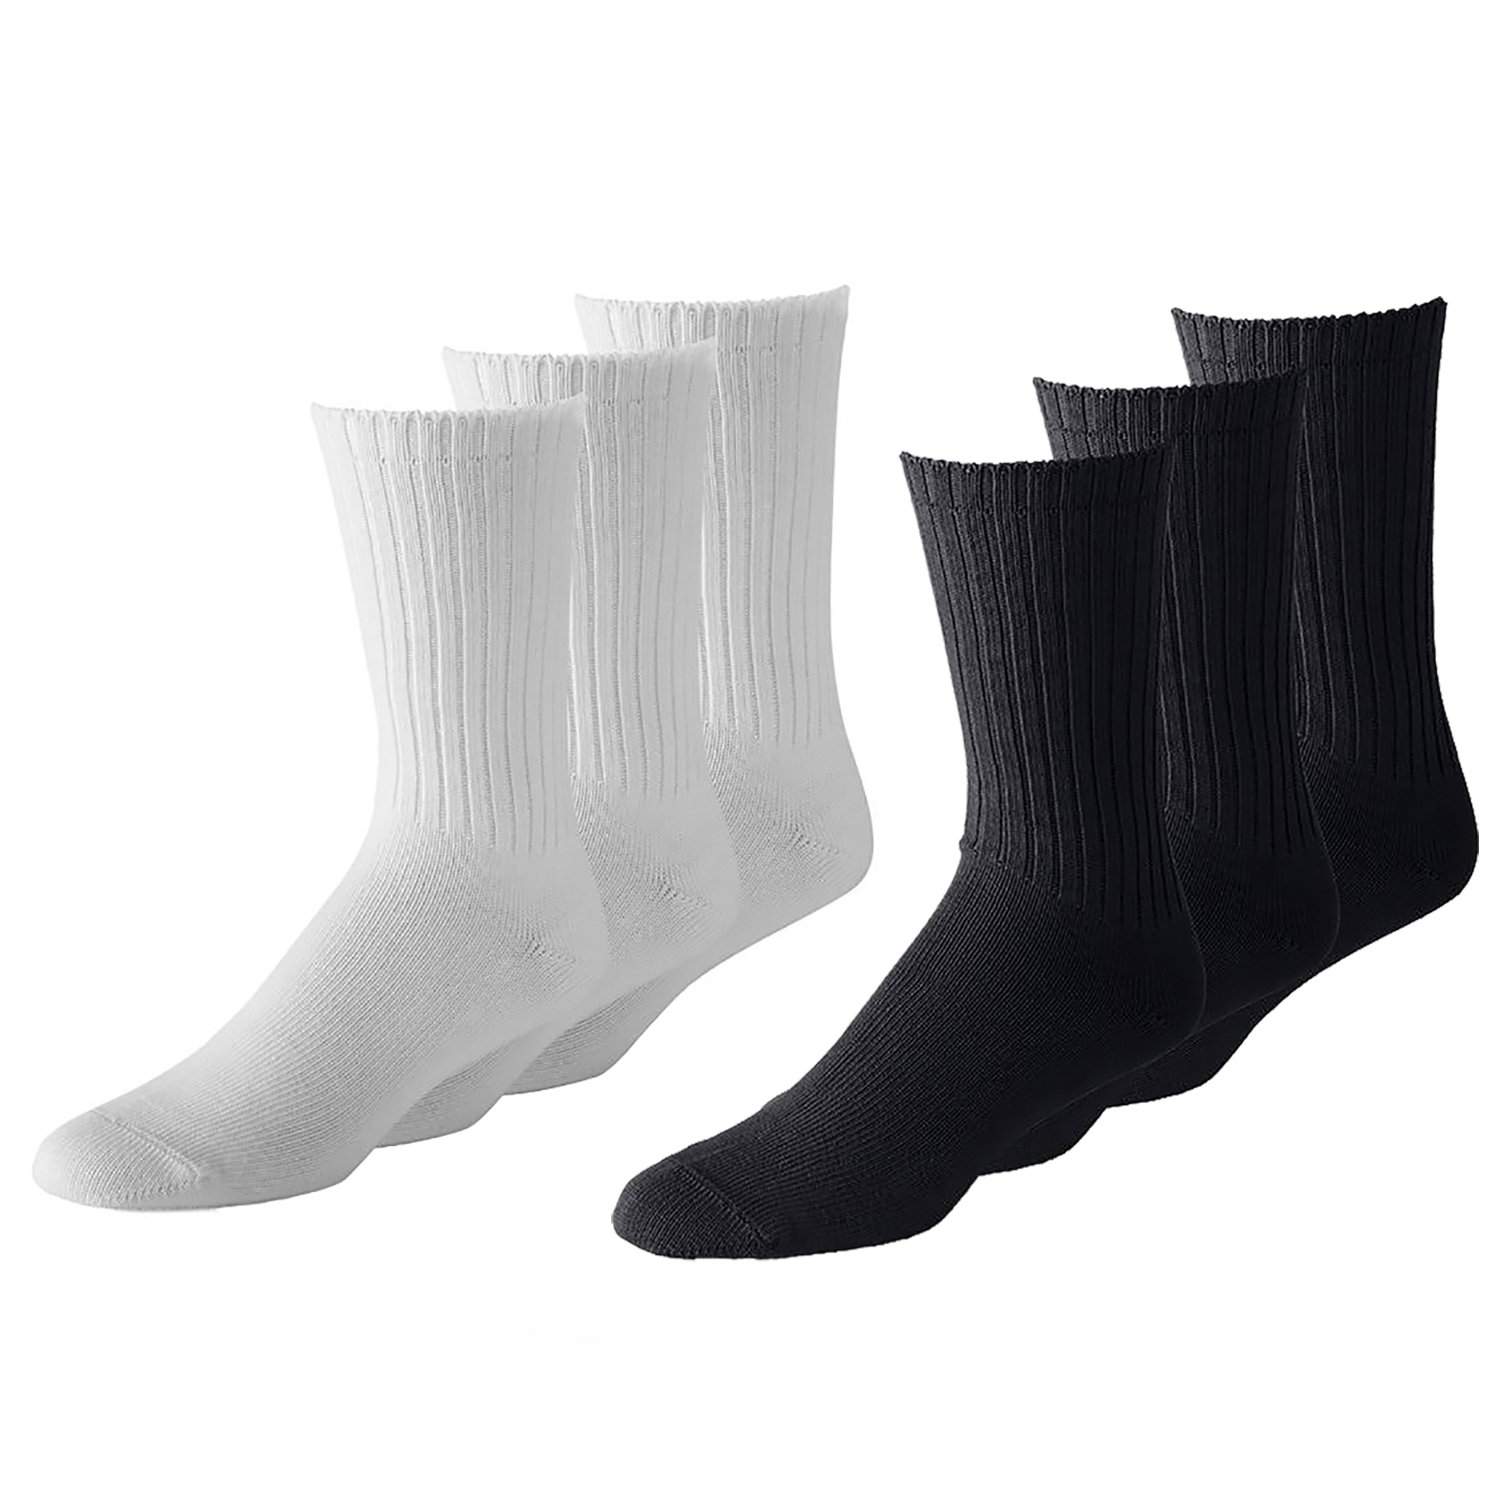 Daily Basic Unisex Crew Athletic Sports Cotton Socks 48 Pack